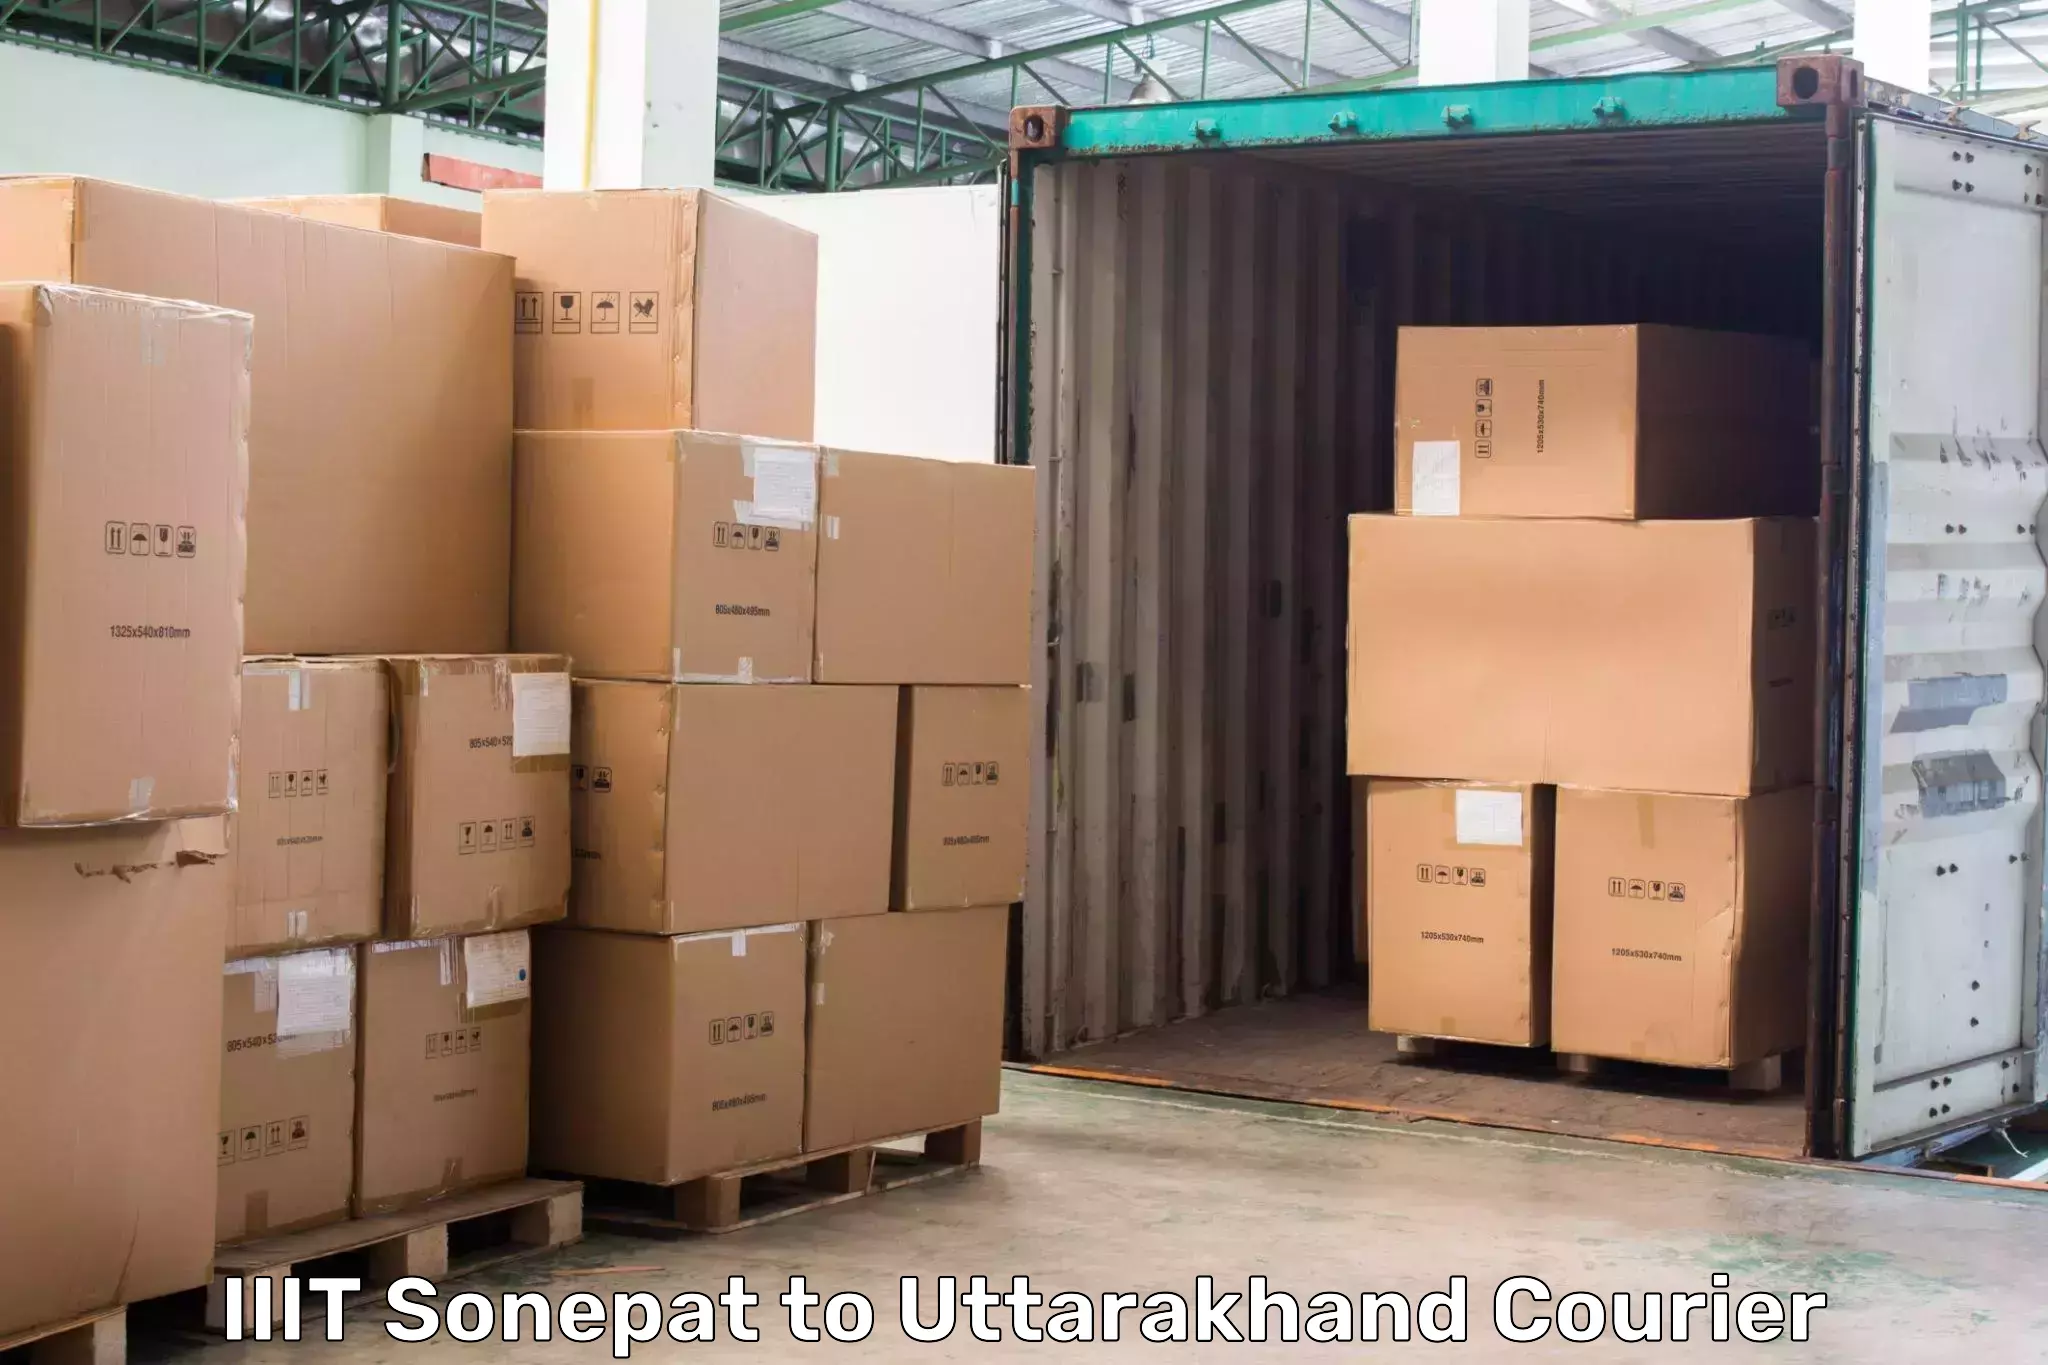 Courier service comparison IIIT Sonepat to Bhagwanpur